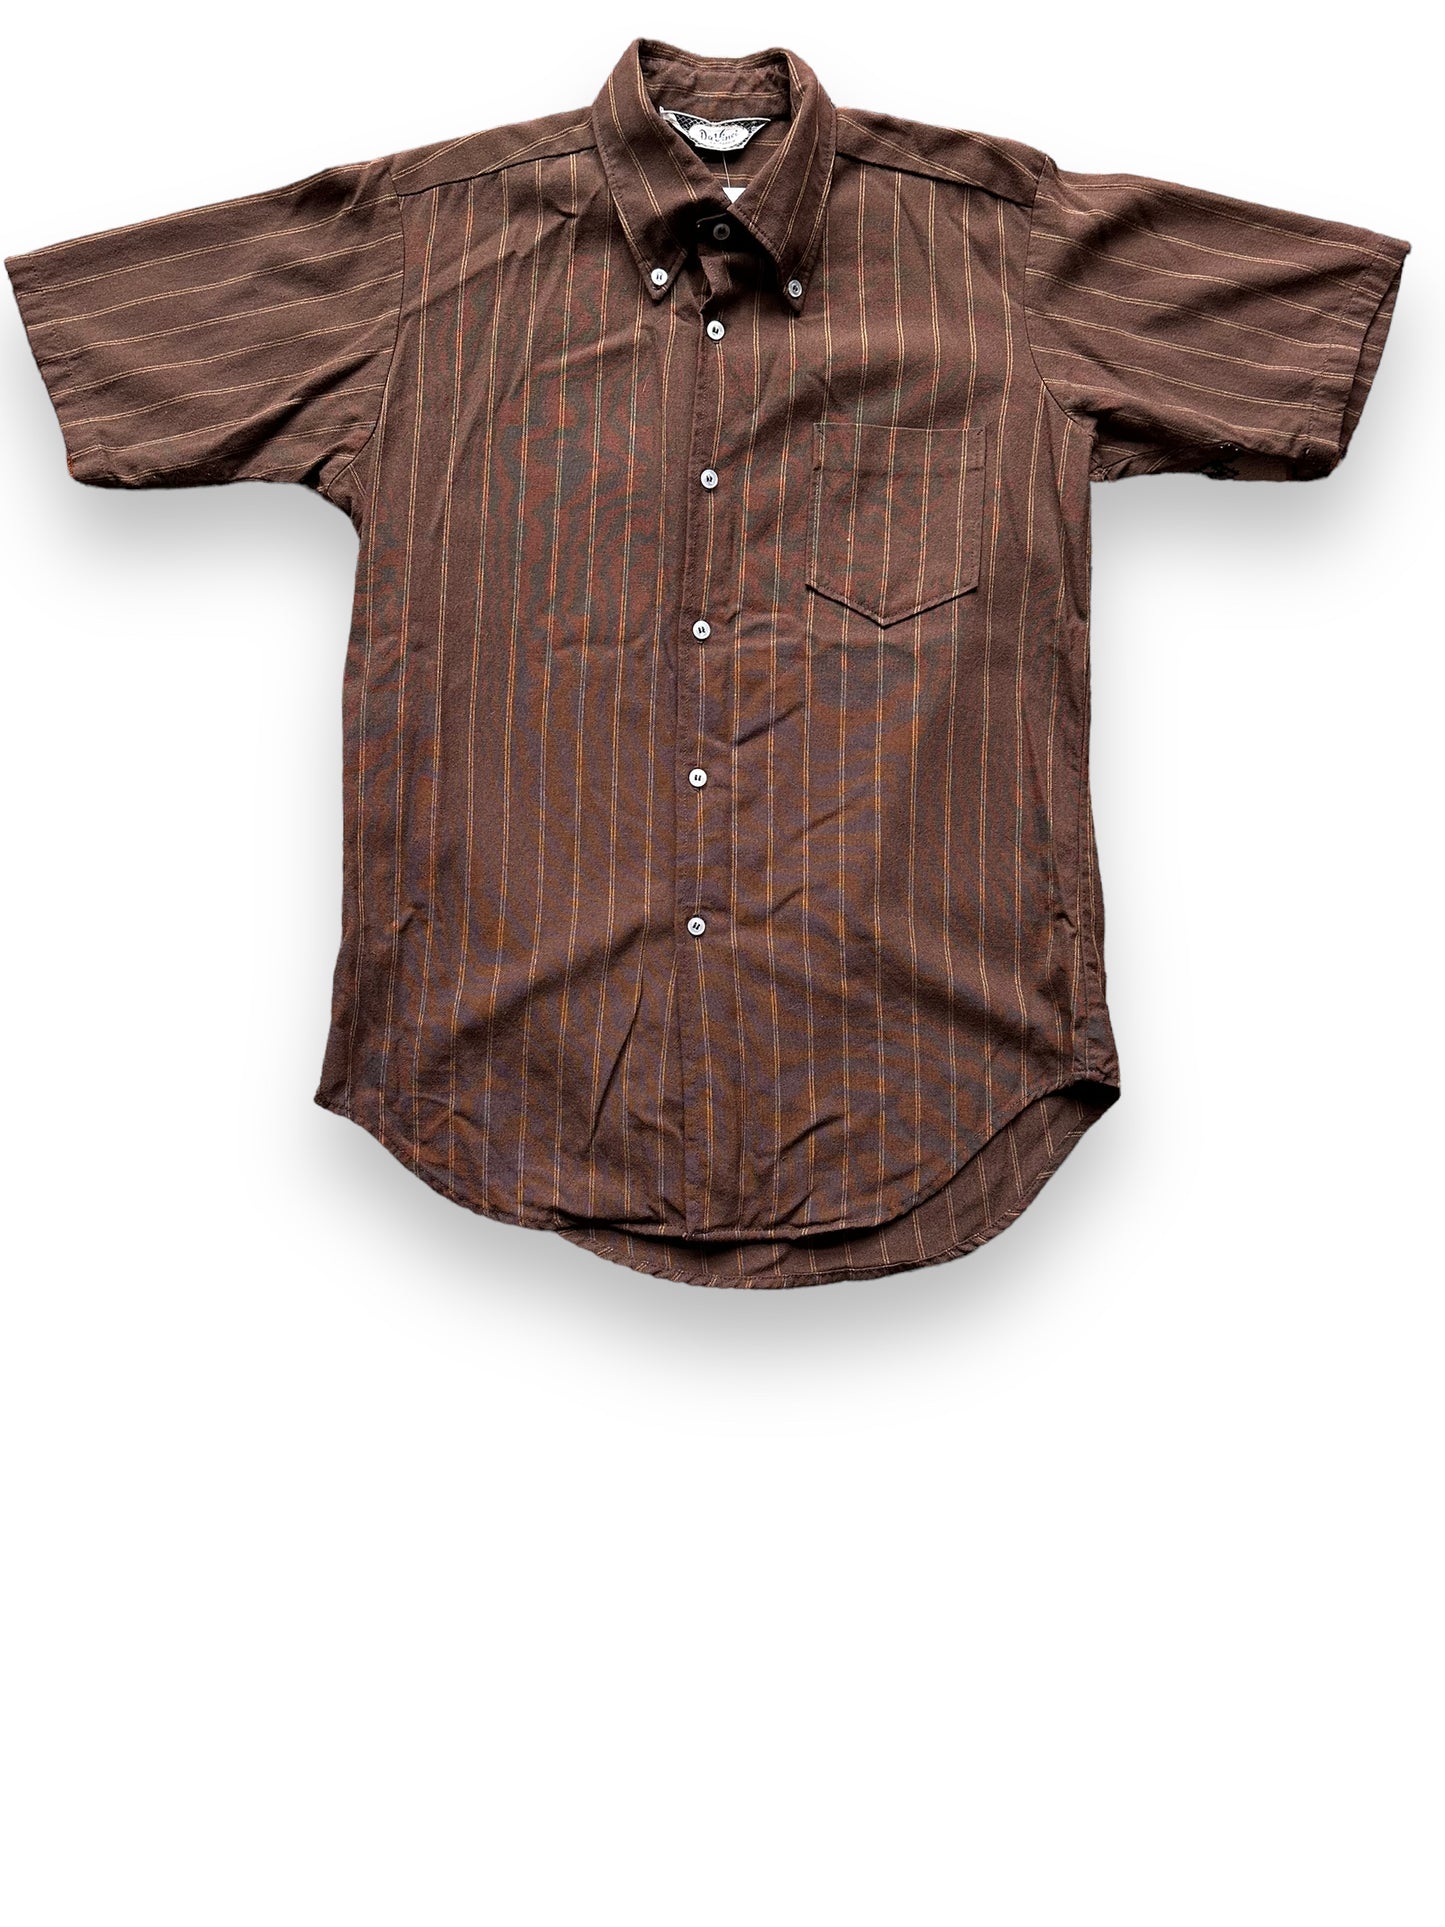 Front View of Vintage Davinci Brown Stripe Short Sleeve Button Up Shirt SZ M | Vintage Button Up Shirt Seattle | Barn Owl Vintage Seattle